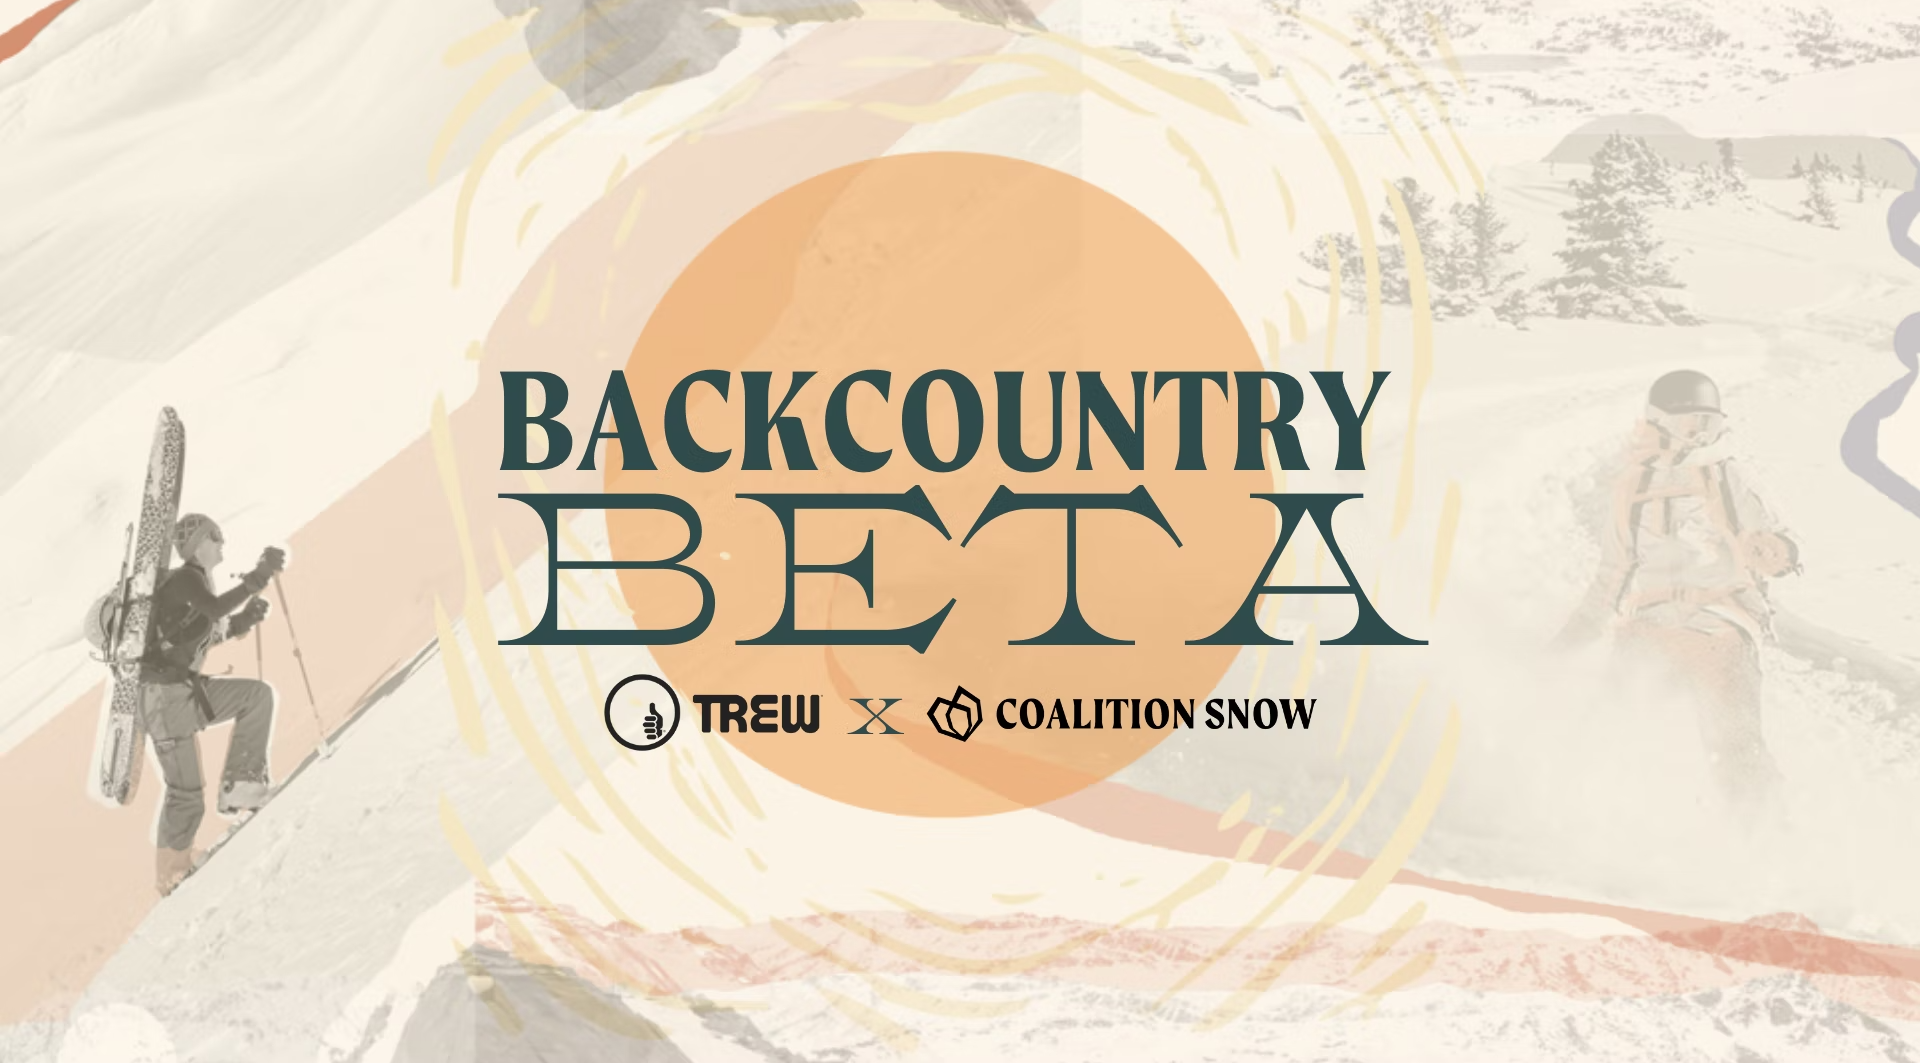 Backcountry Beta Free Backcountry Virtual Education